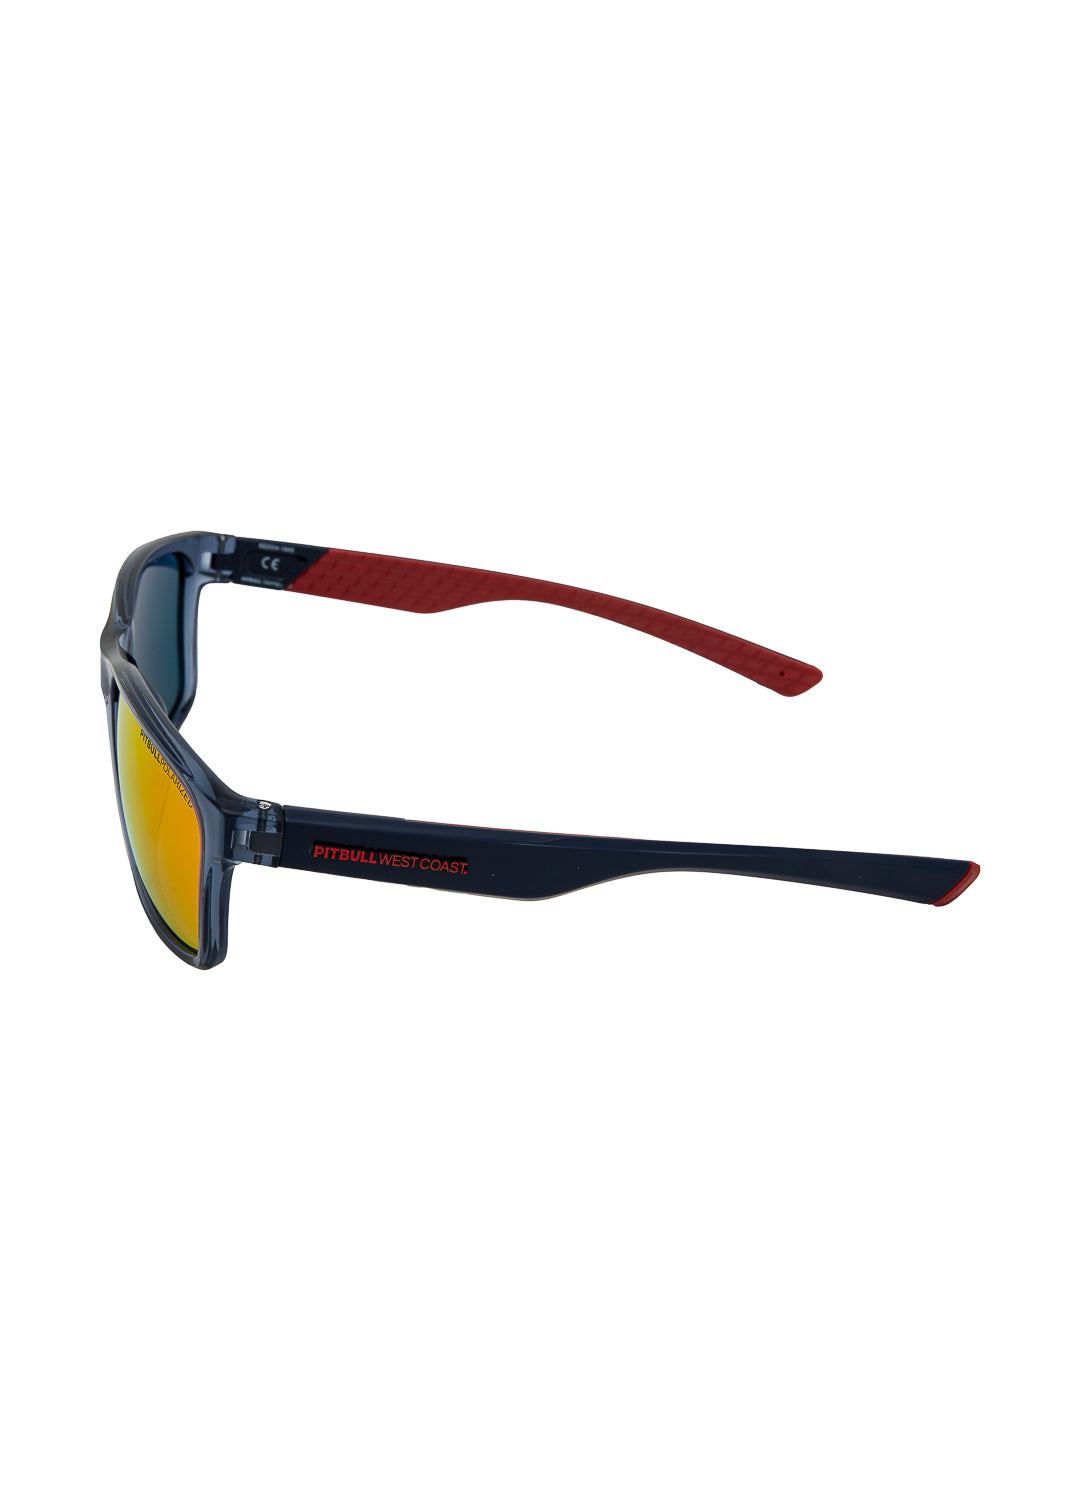 Sunglasses SANTEE Grey/Red - Pitbull West Coast International Store 